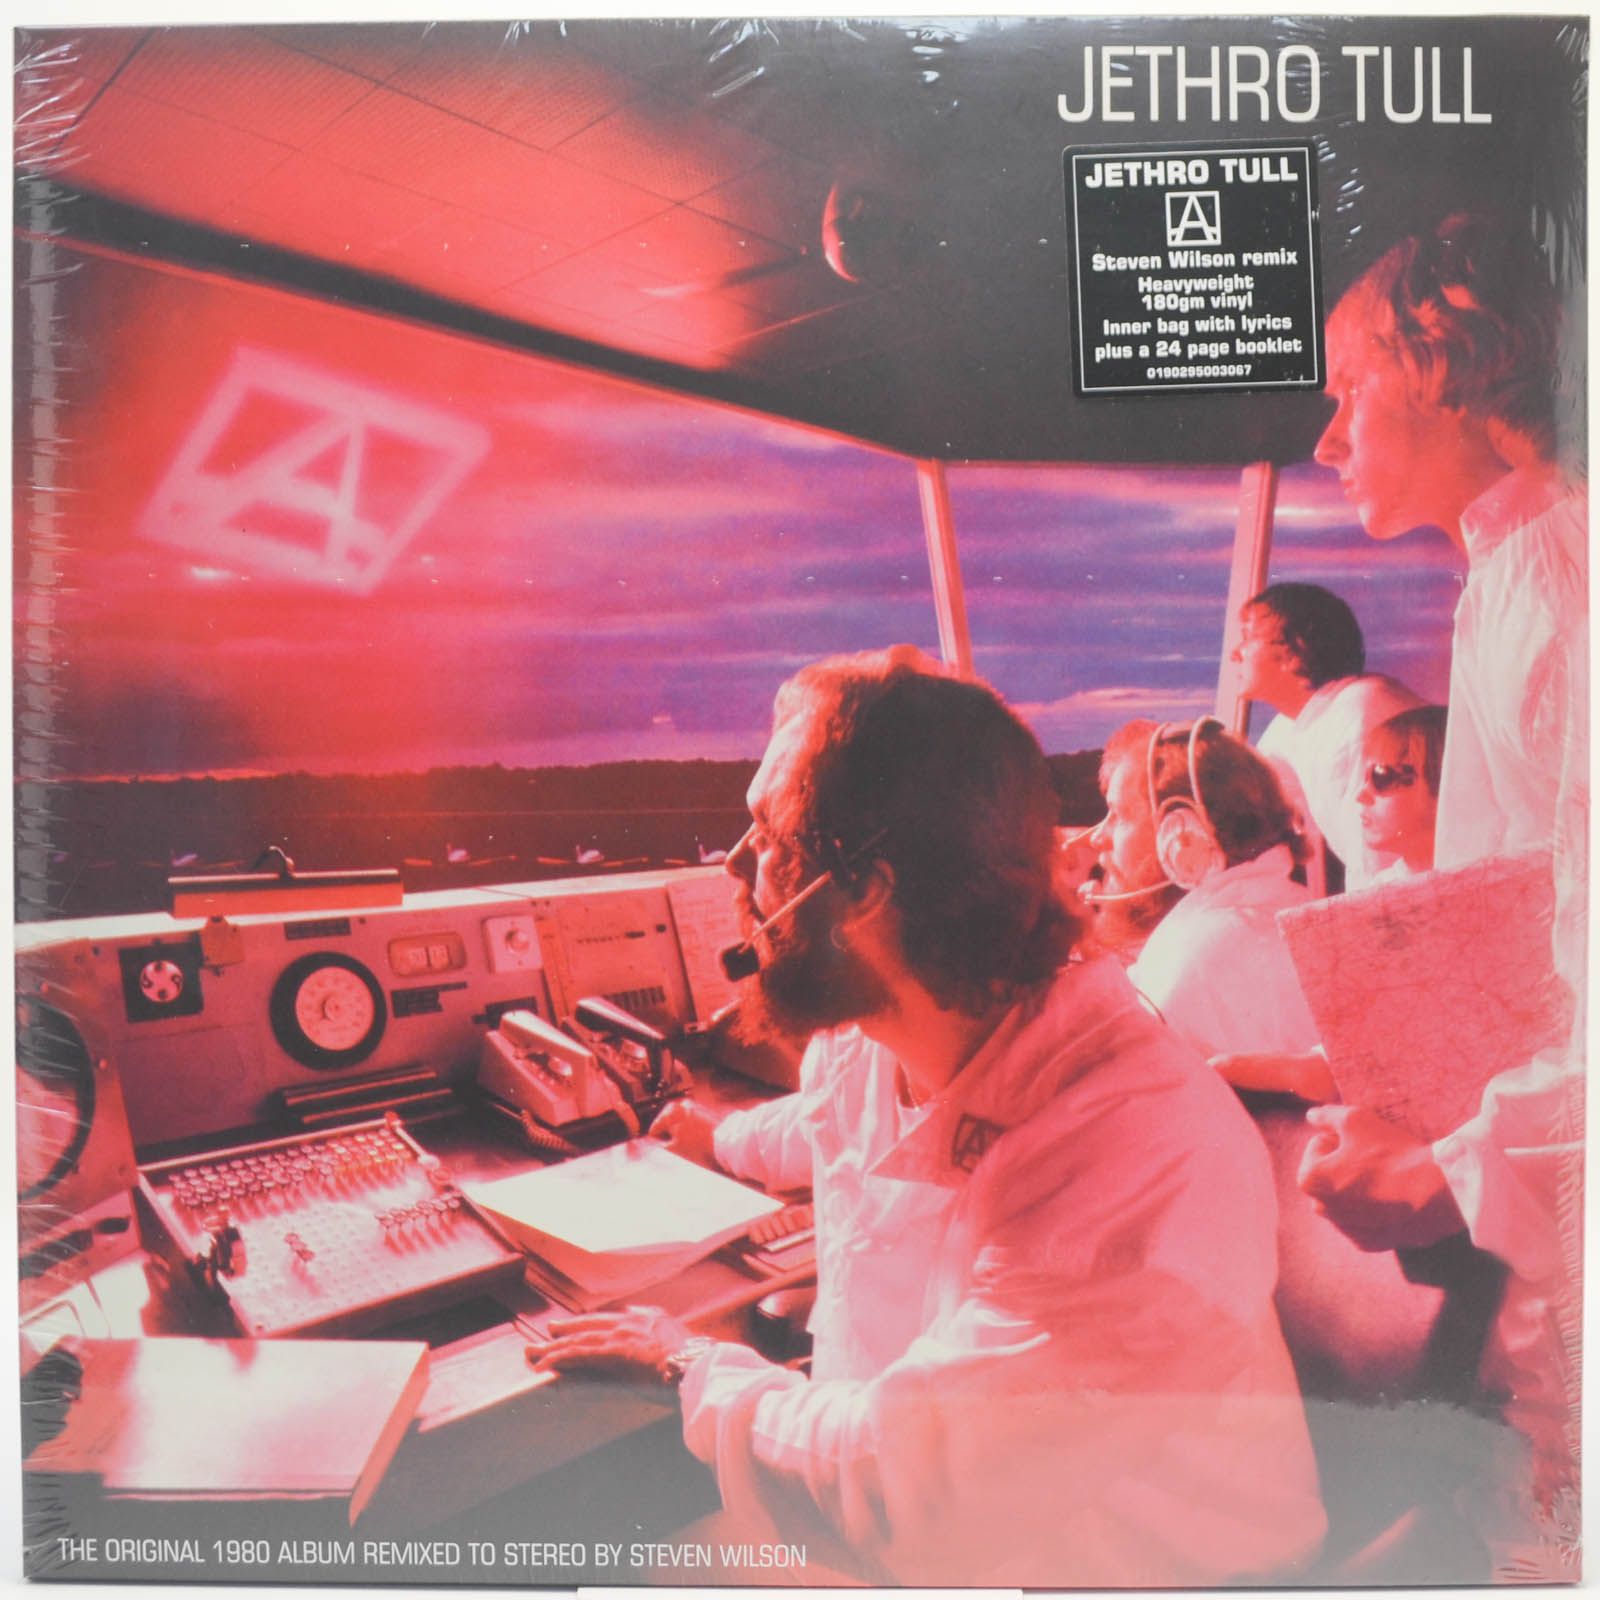 Jethro Tull — A, 1979